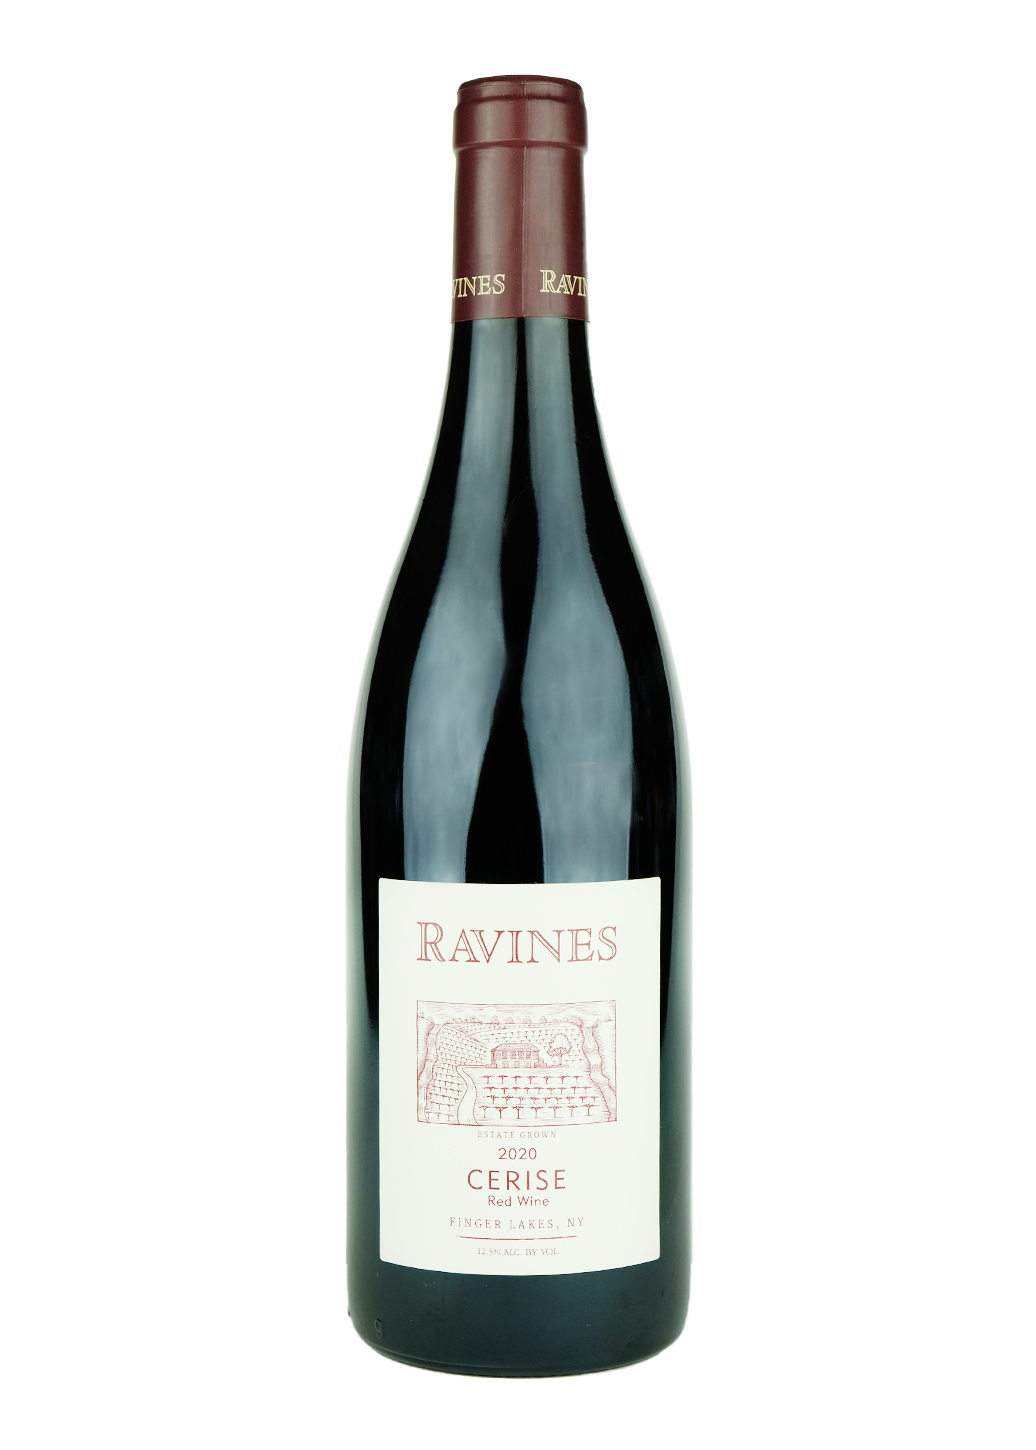 Ravines 2020 Pinot Noir/Blaüfrankisch blend Cerise